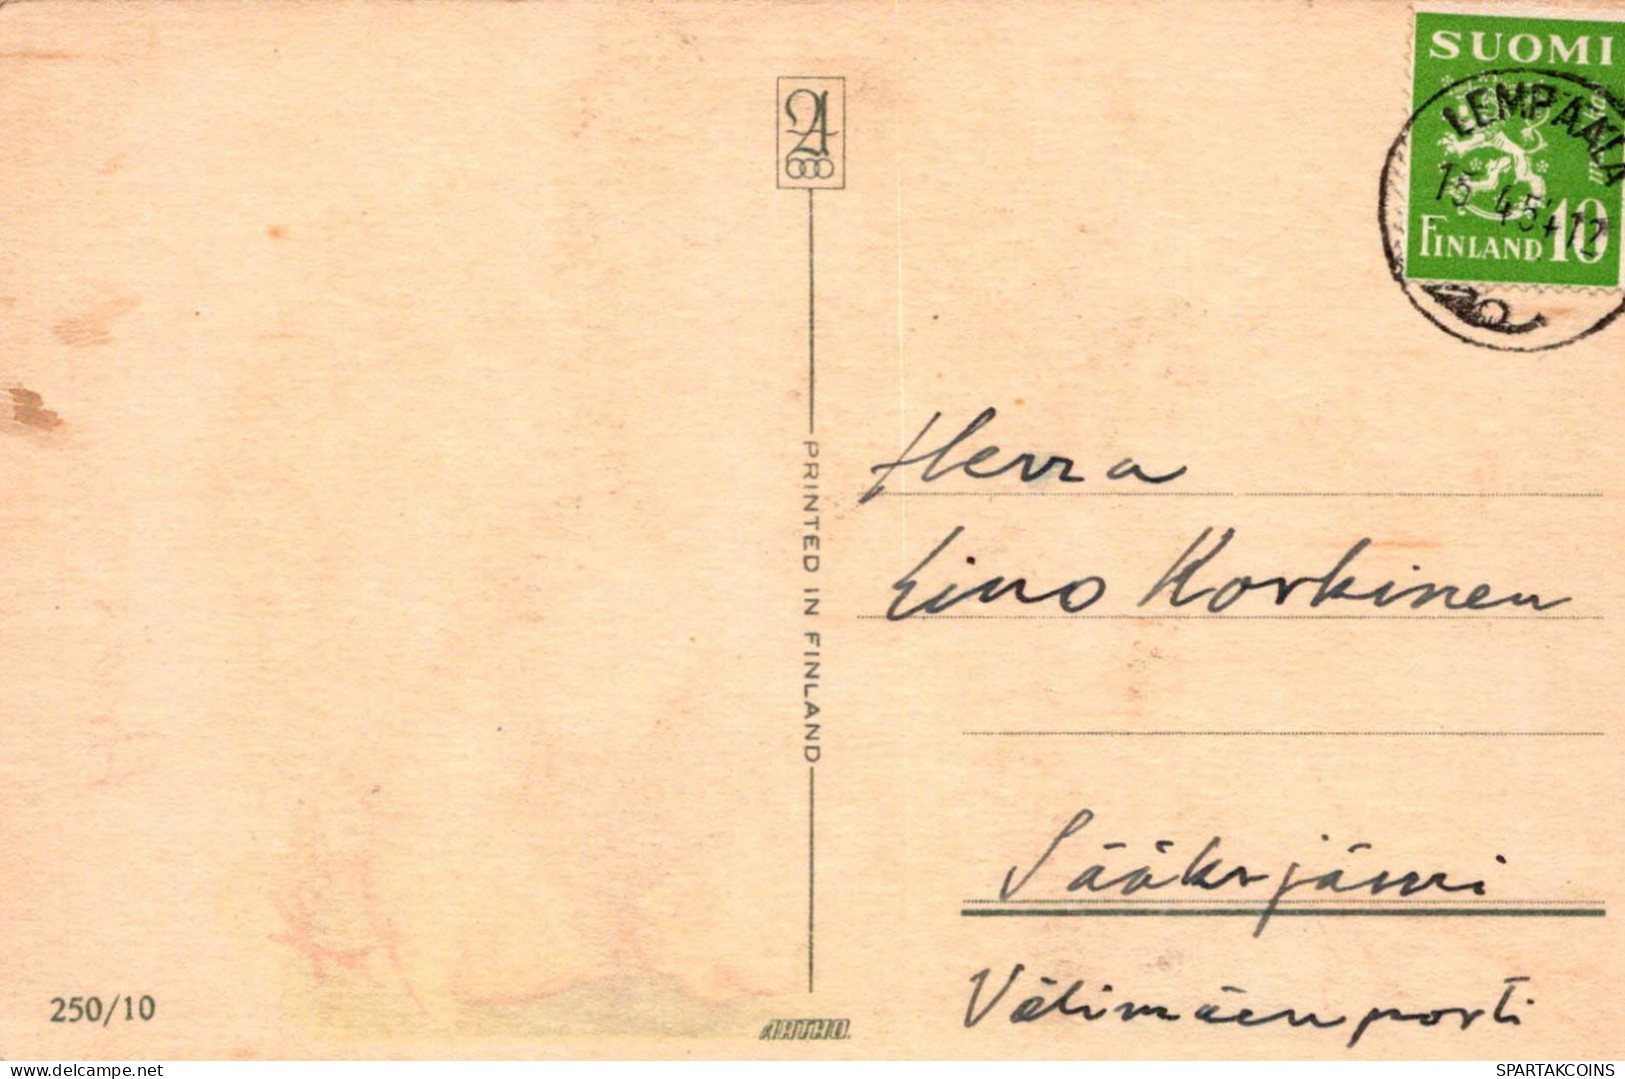 PASQUA BAMBINO UOVO Vintage Cartolina CPA #PKE237.IT - Pâques